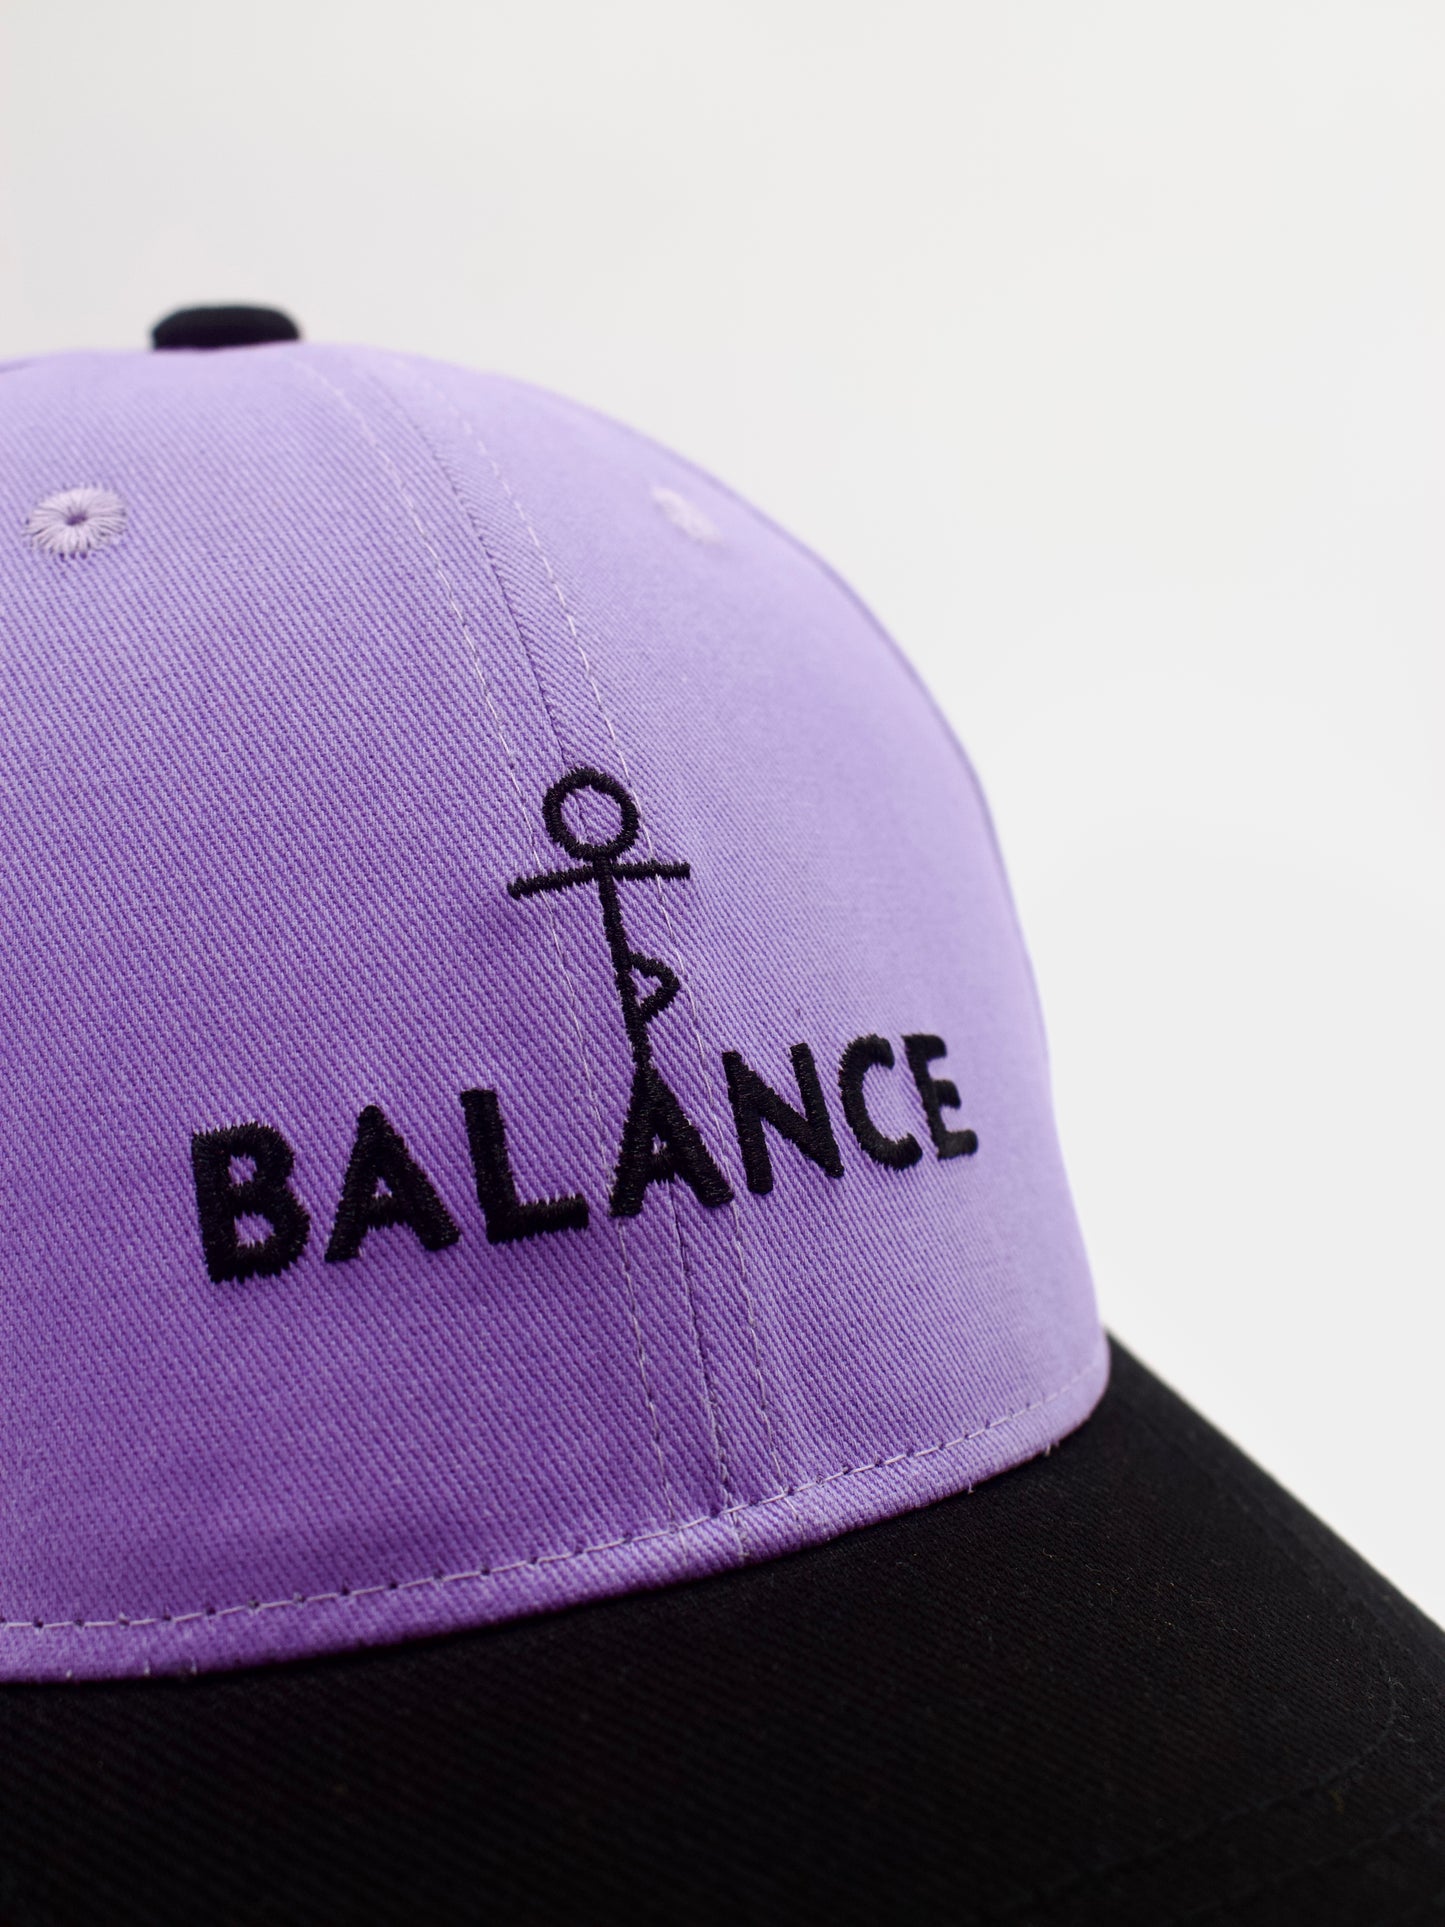 Balance Cap